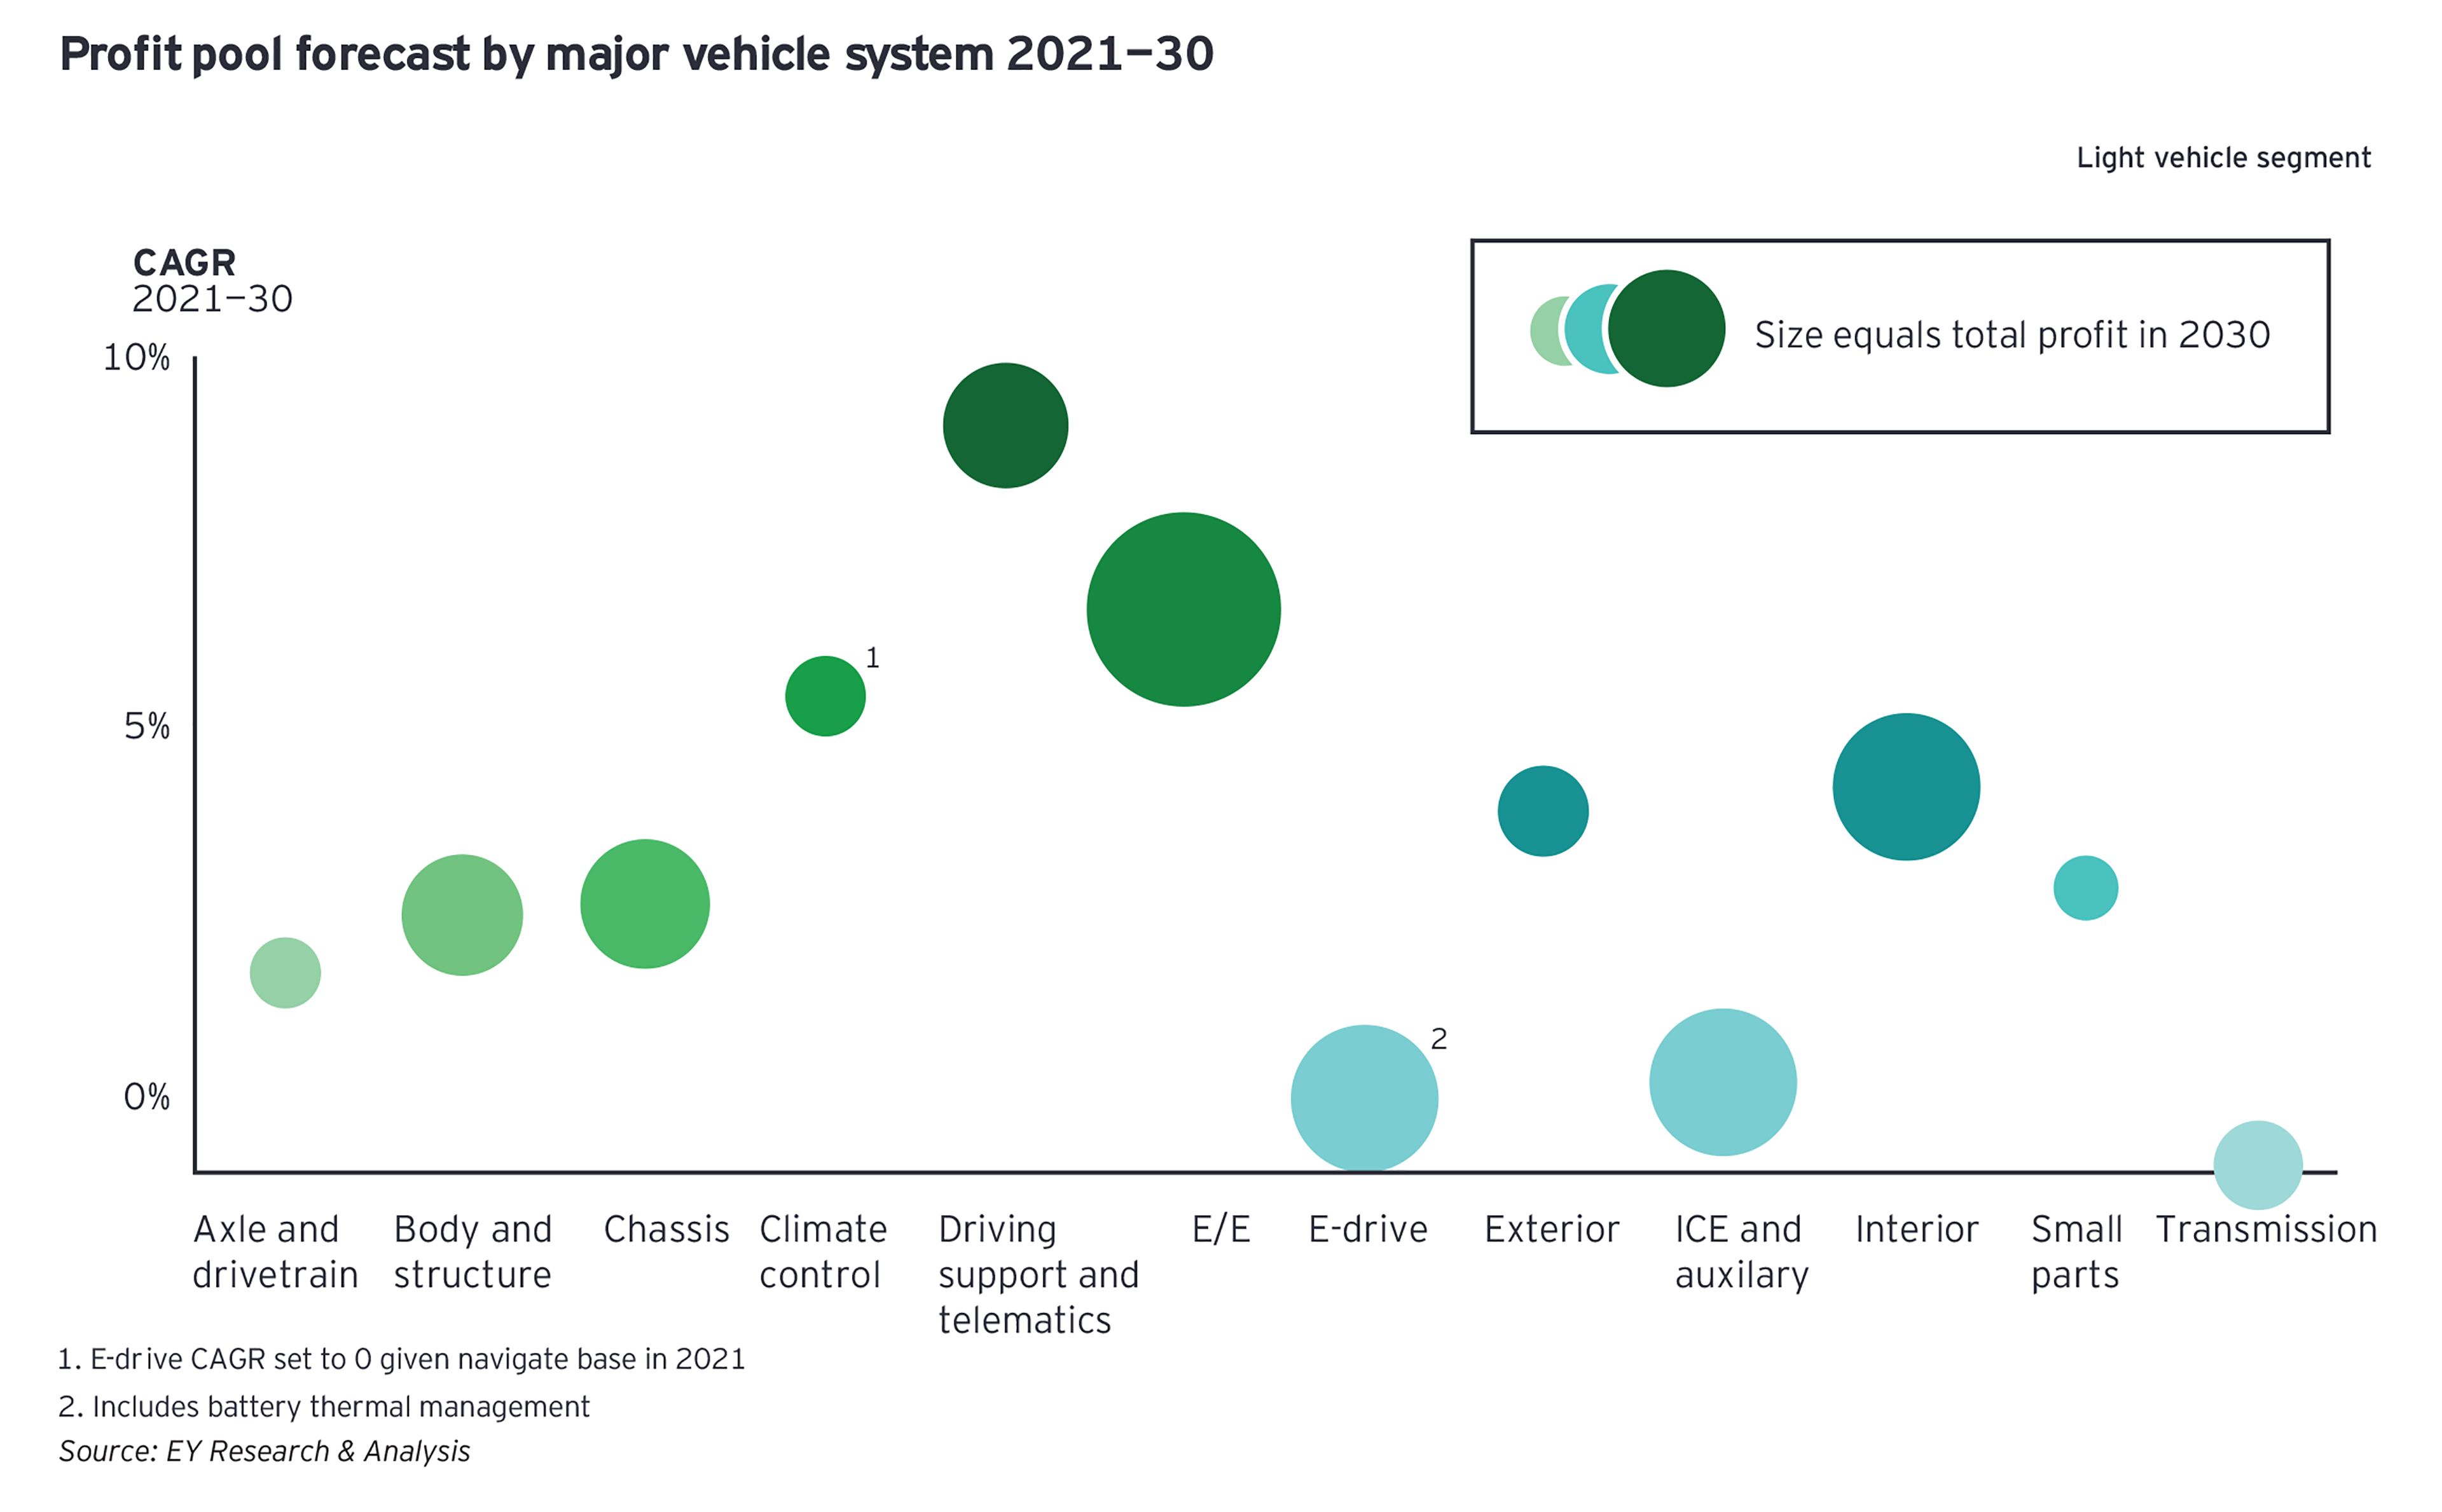 Profit pool forecast by major vehicle system 2021-2030, light vehicle segment